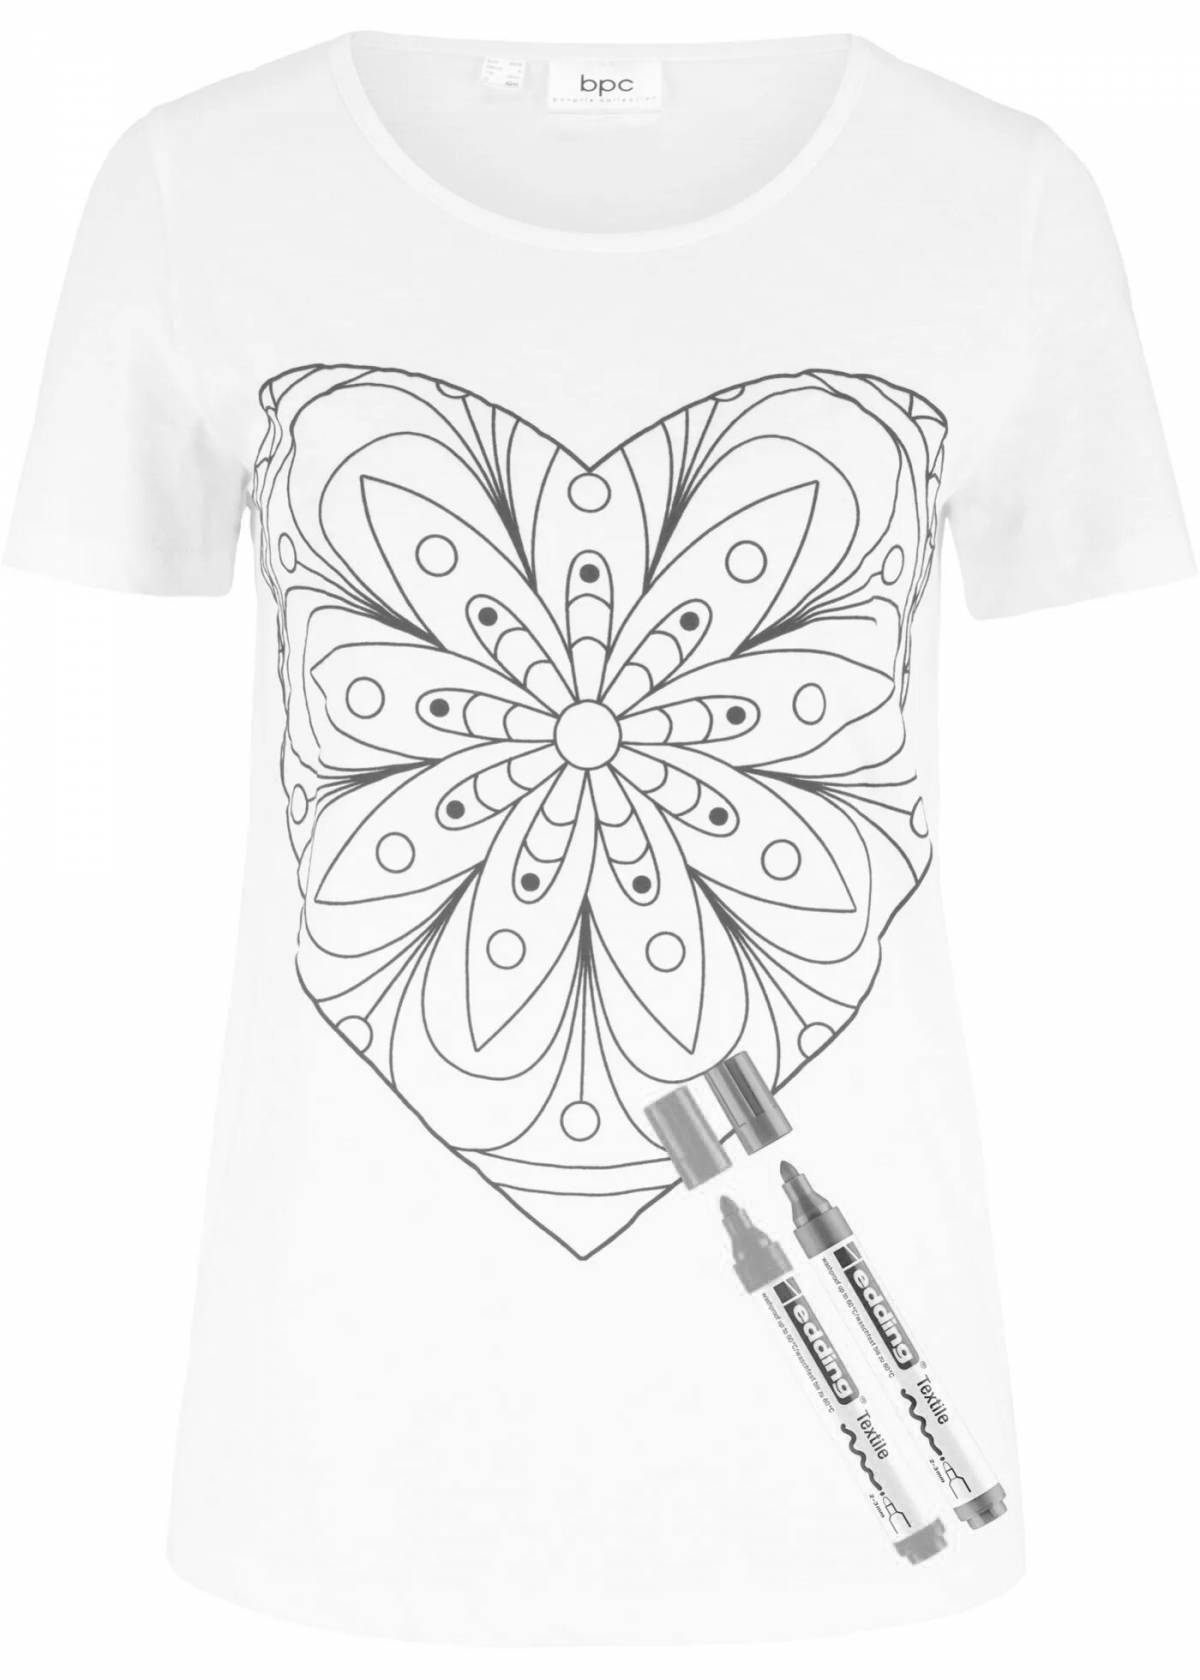 Vibrant T-shirt coloring with felt-tip pens